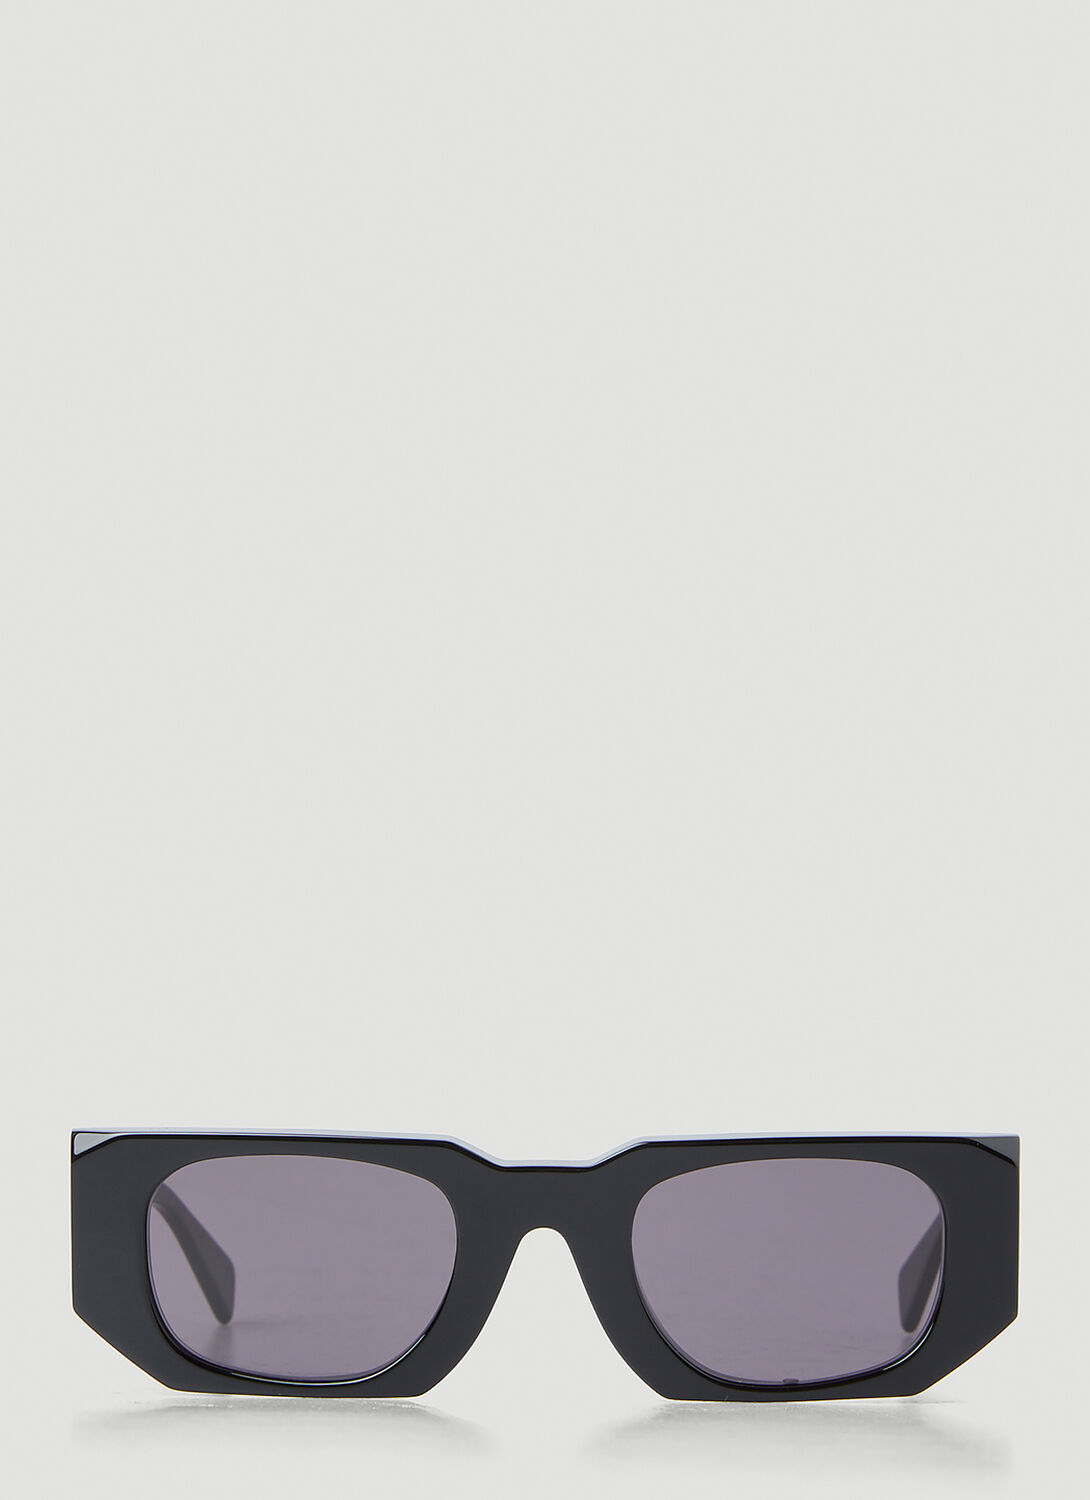 Kuboraum Black U8 Sunglasses